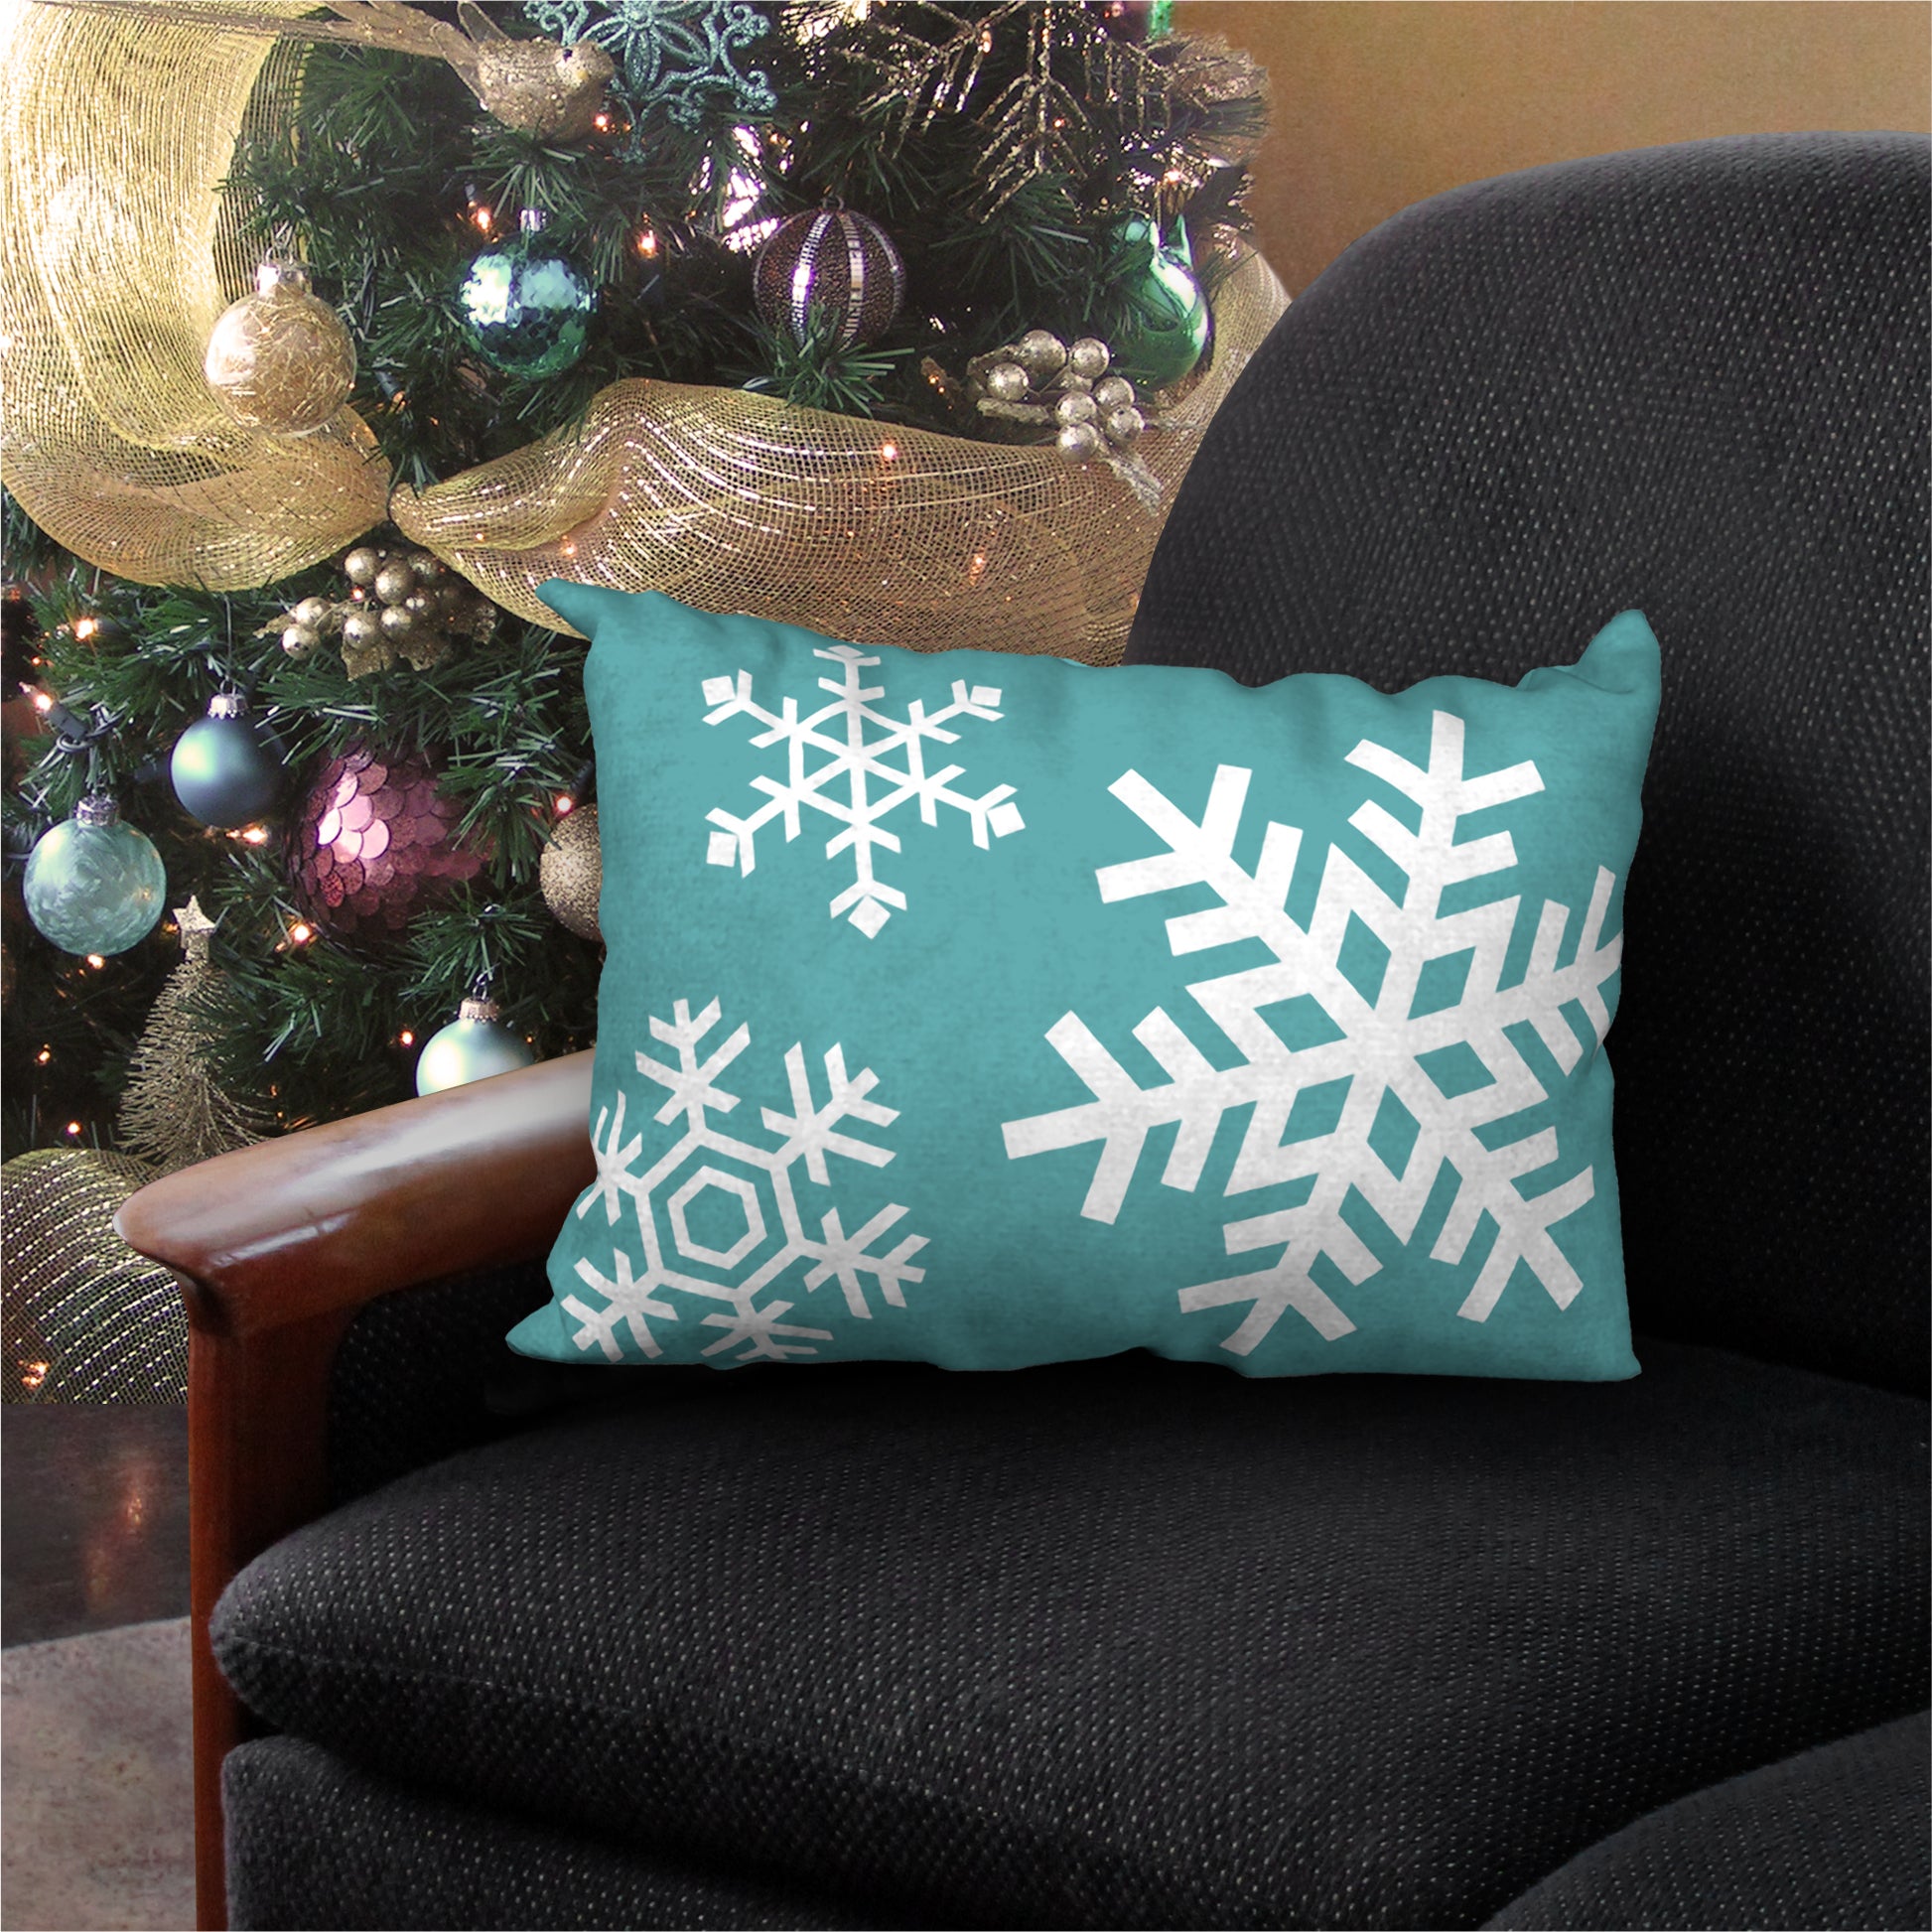 Christmas Bird Pillows Decorative Christmas Pillow Cover and Insert 